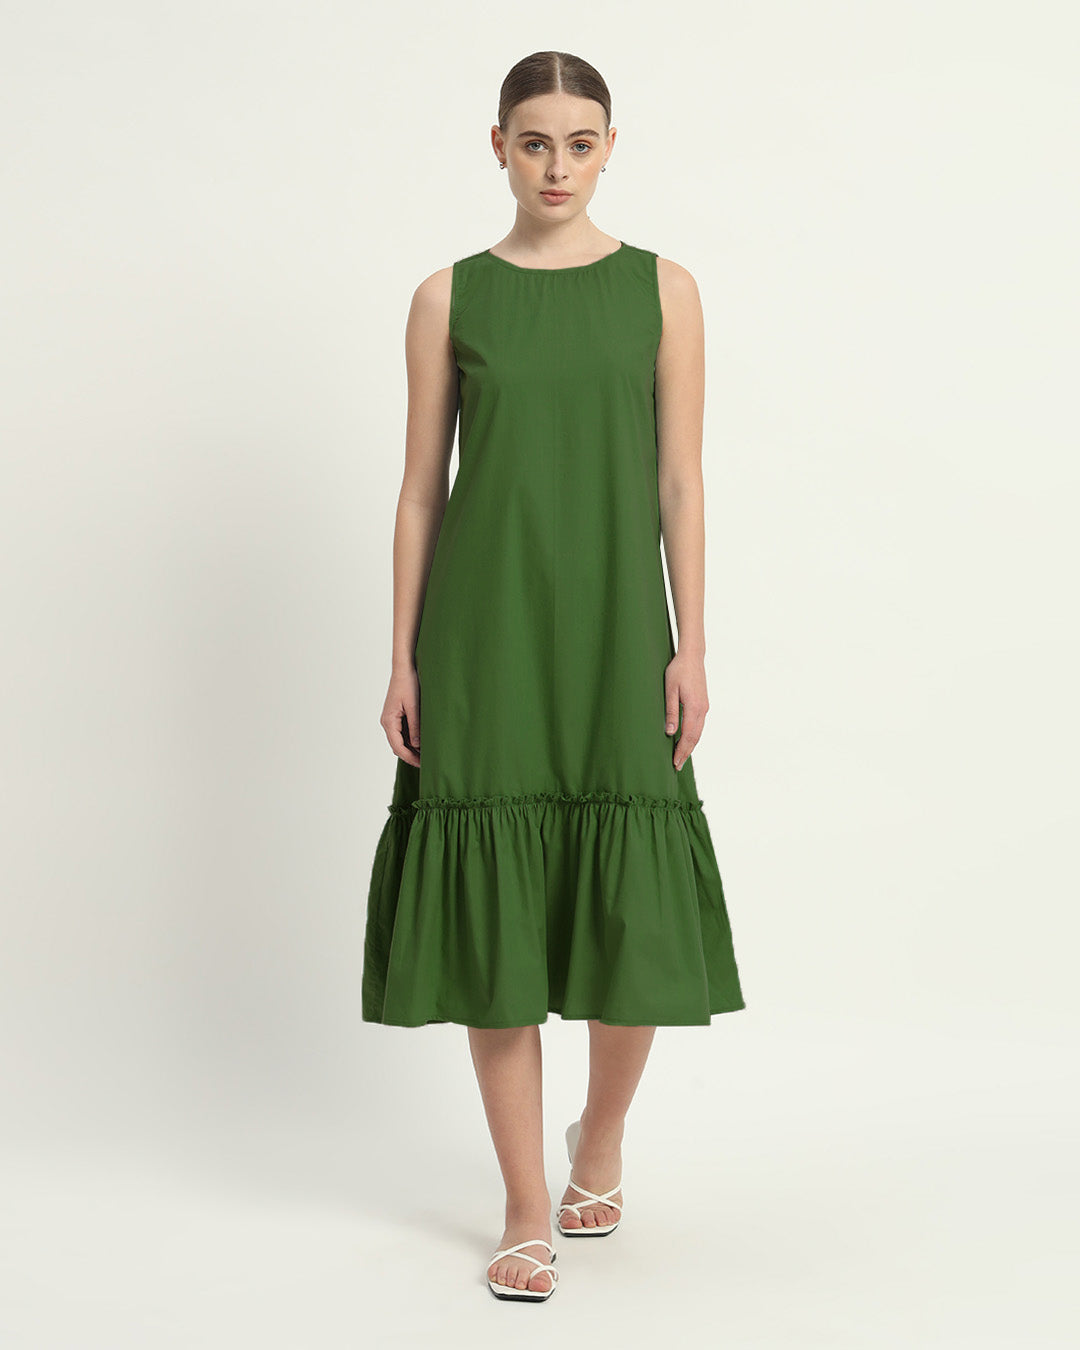 The Millis Emerald Cotton Dress